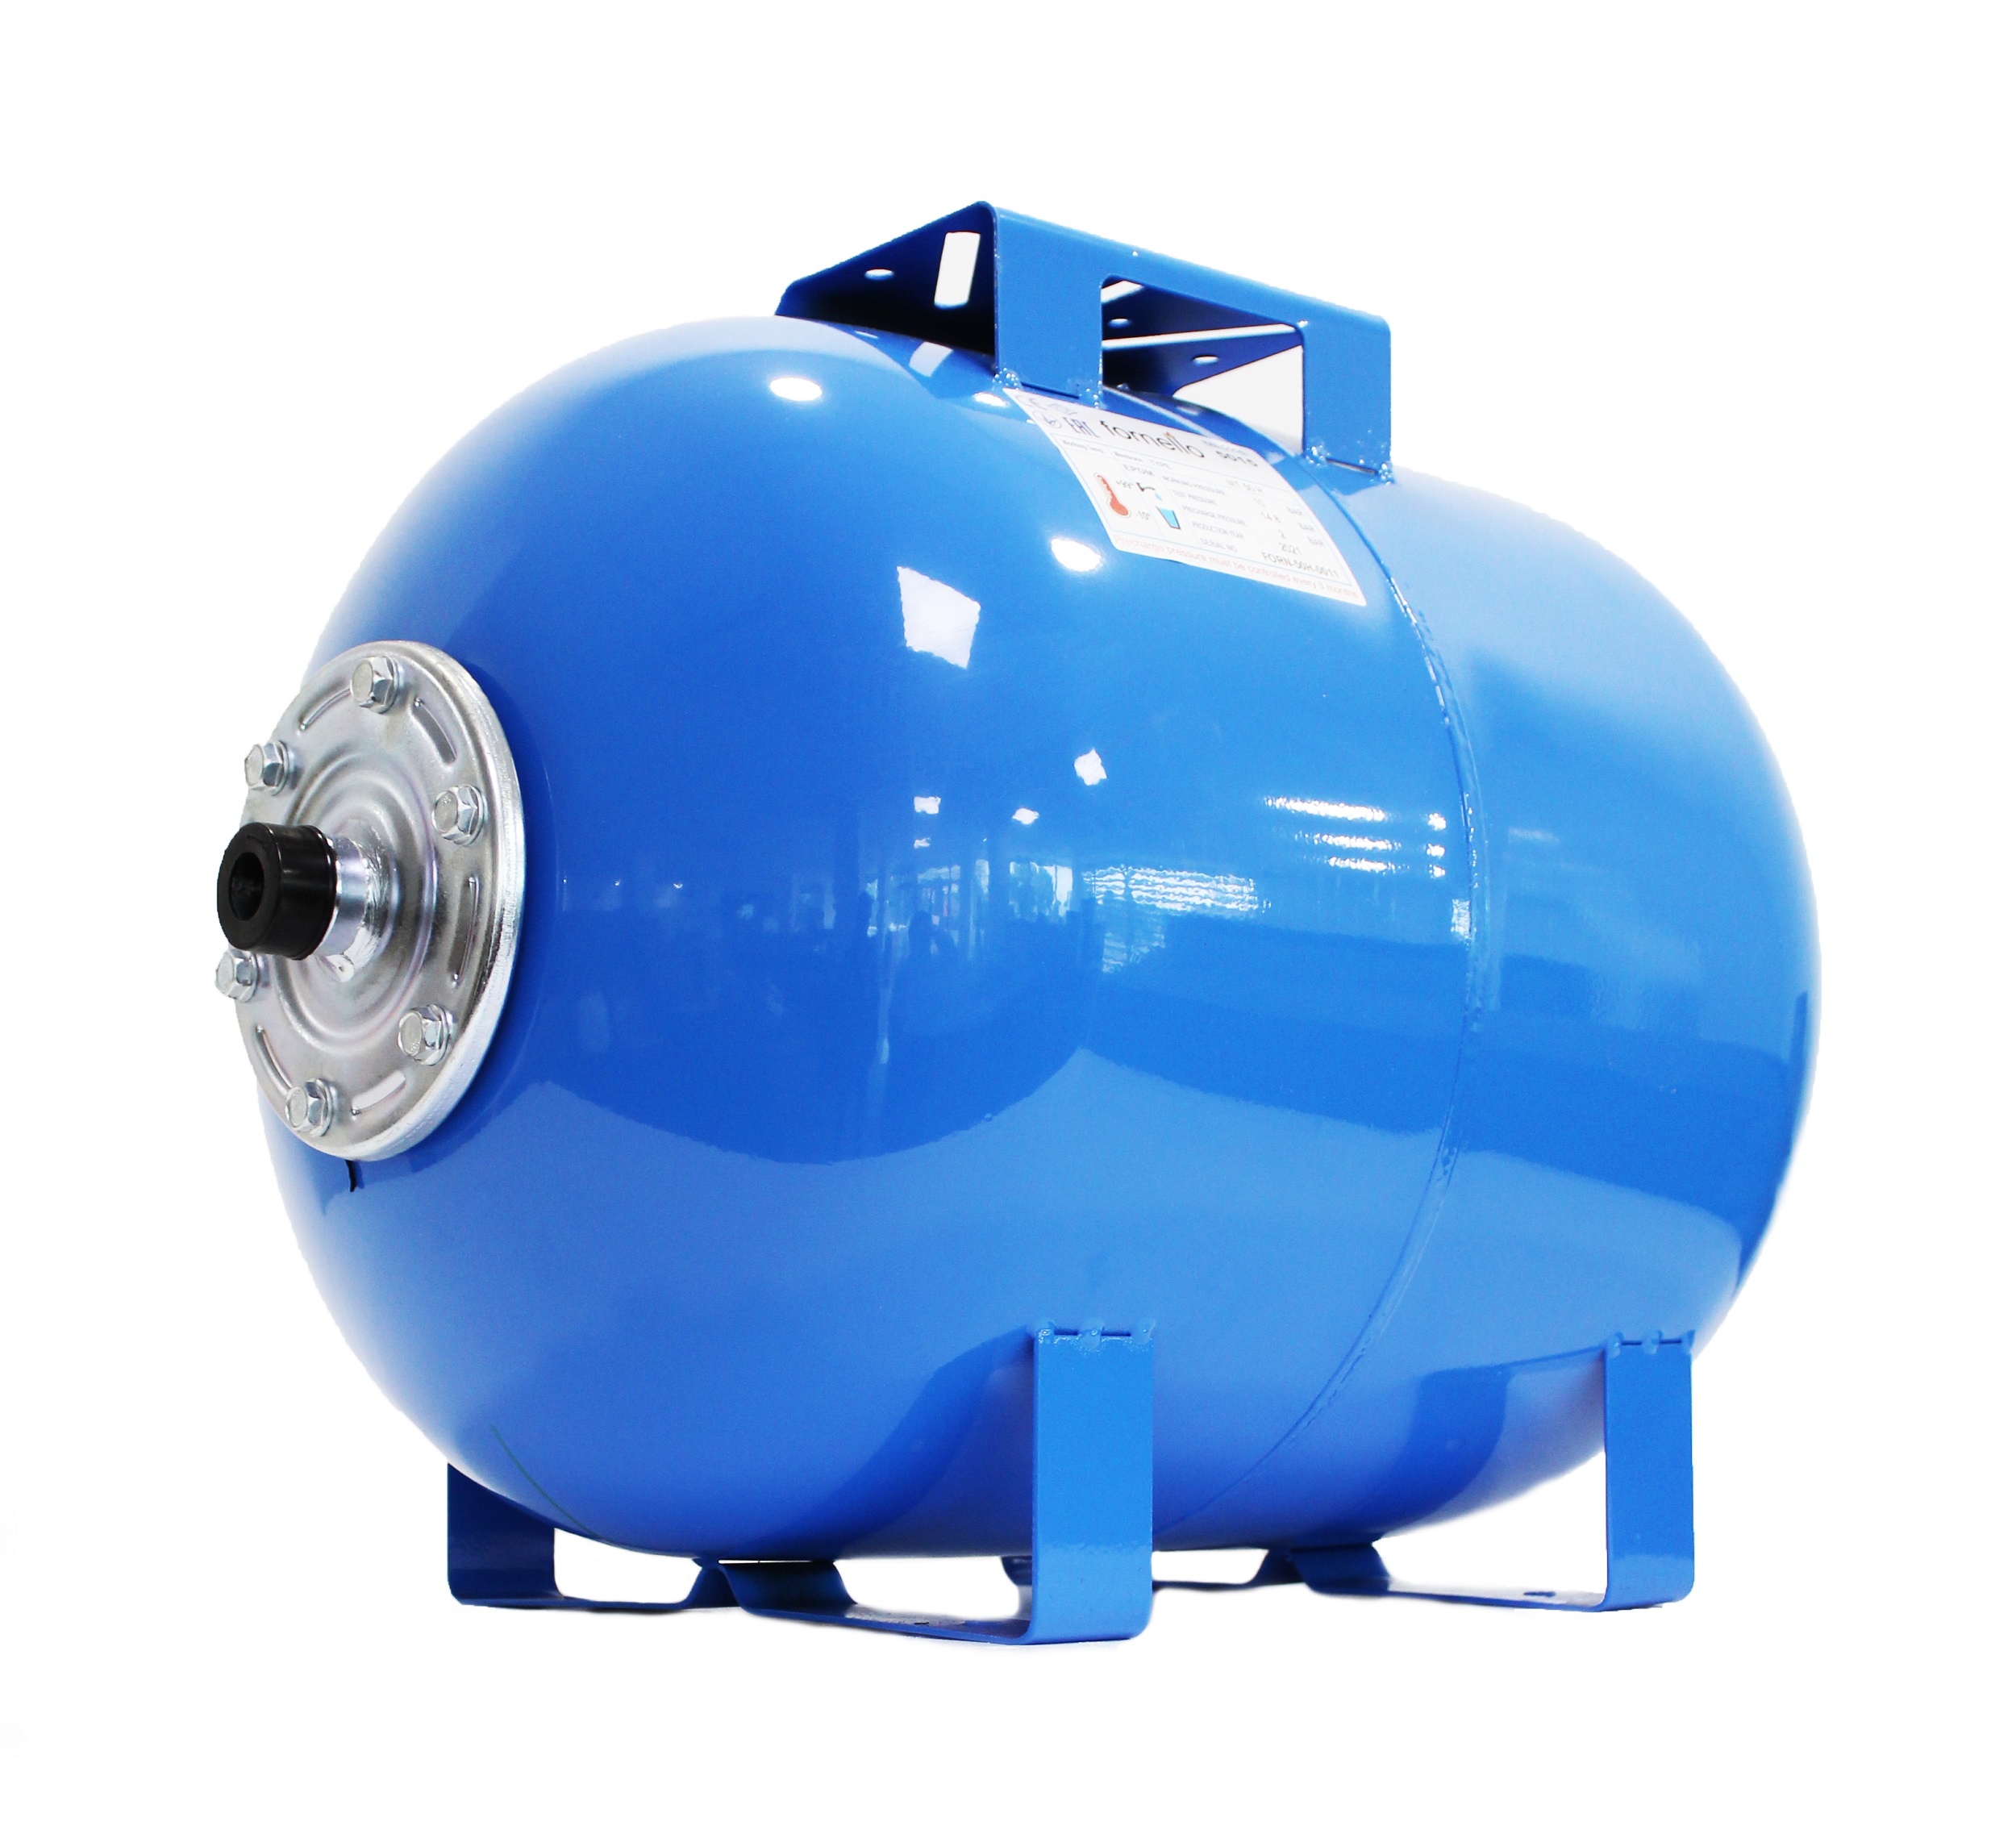 Vas expansiune pentru hidrofor Fornello 50 litri, orizontal, culoare albastru, presiune maxima 10 bar, membrana EPDM albastru